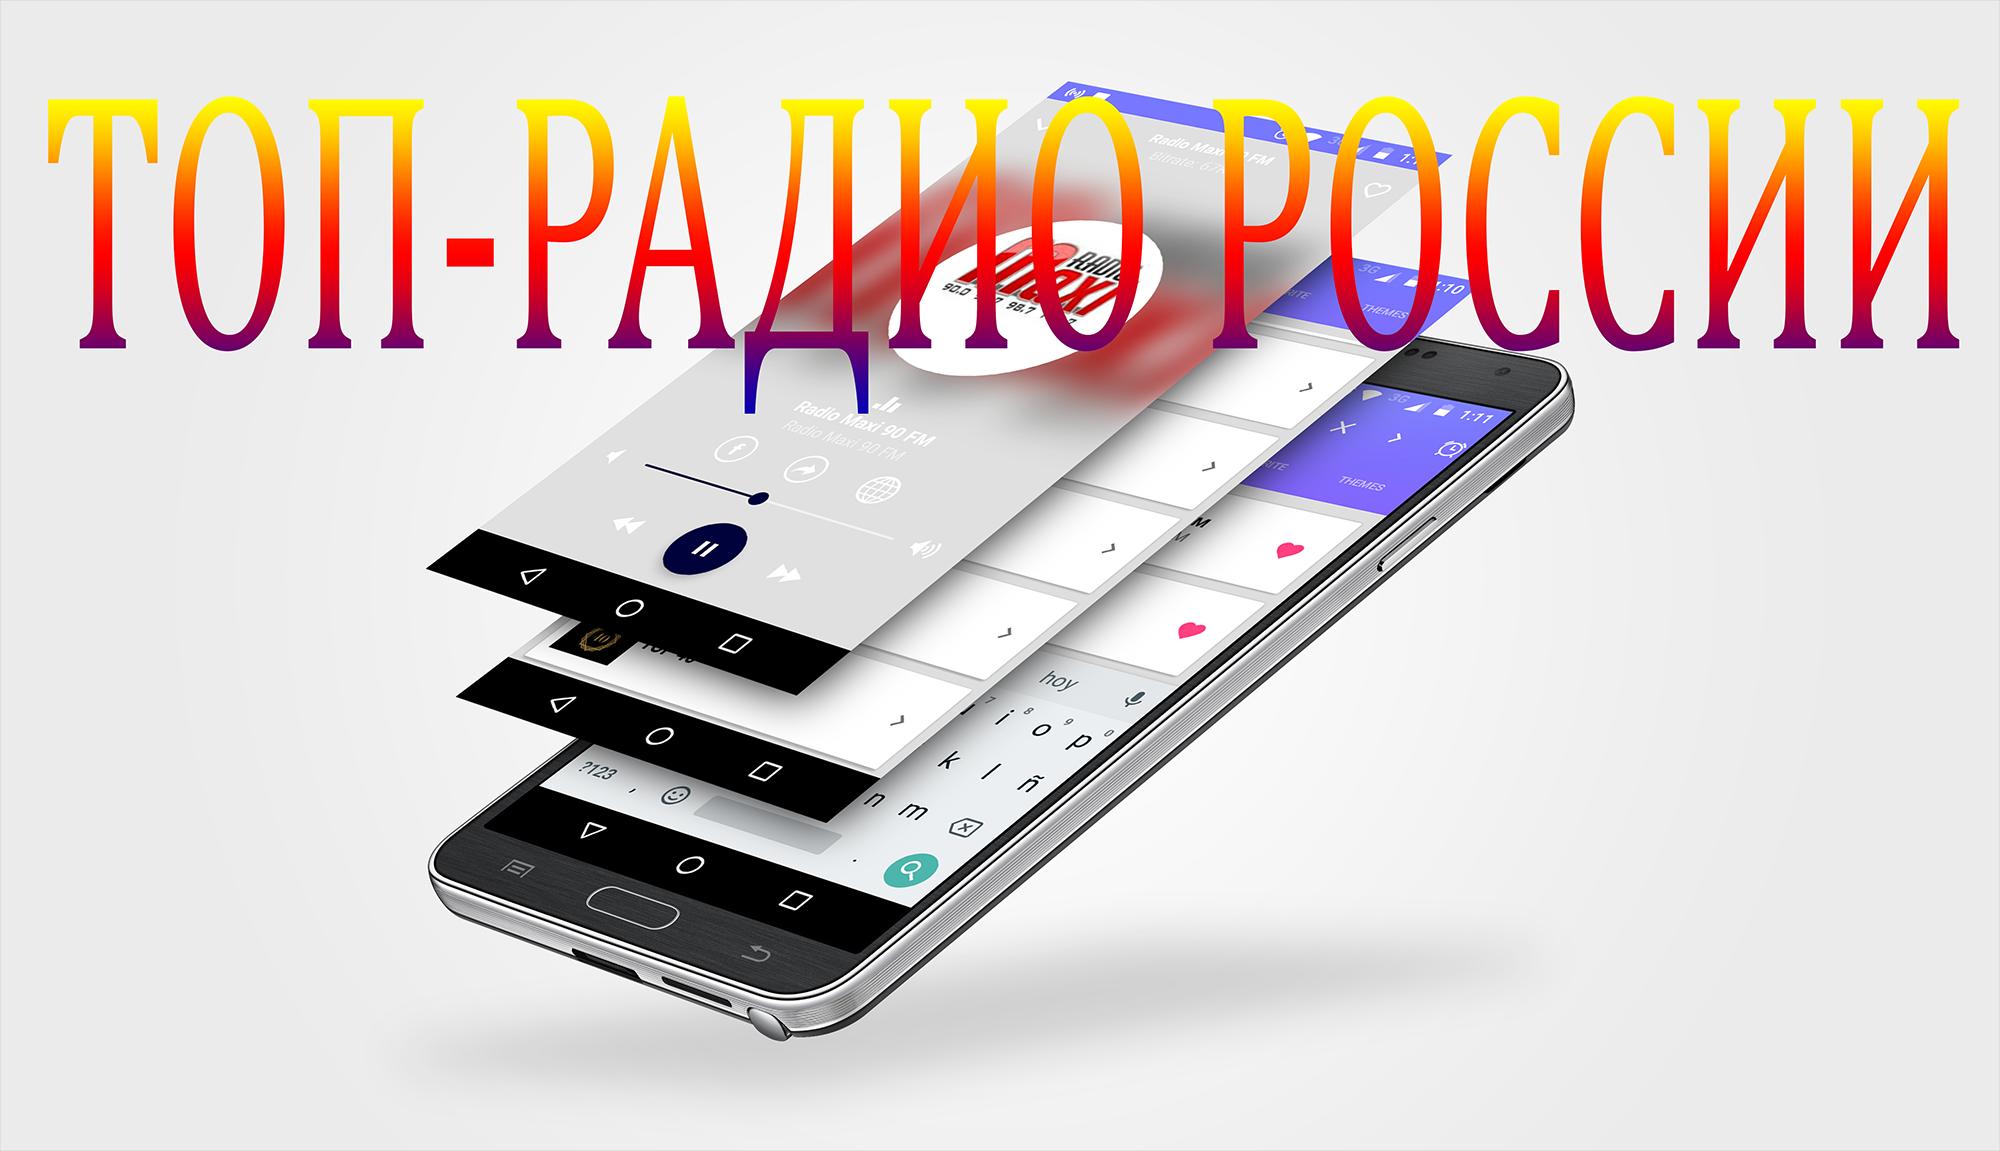 VANYA Radio 68.66 FM St. Petersburg Online for Android - APK Download